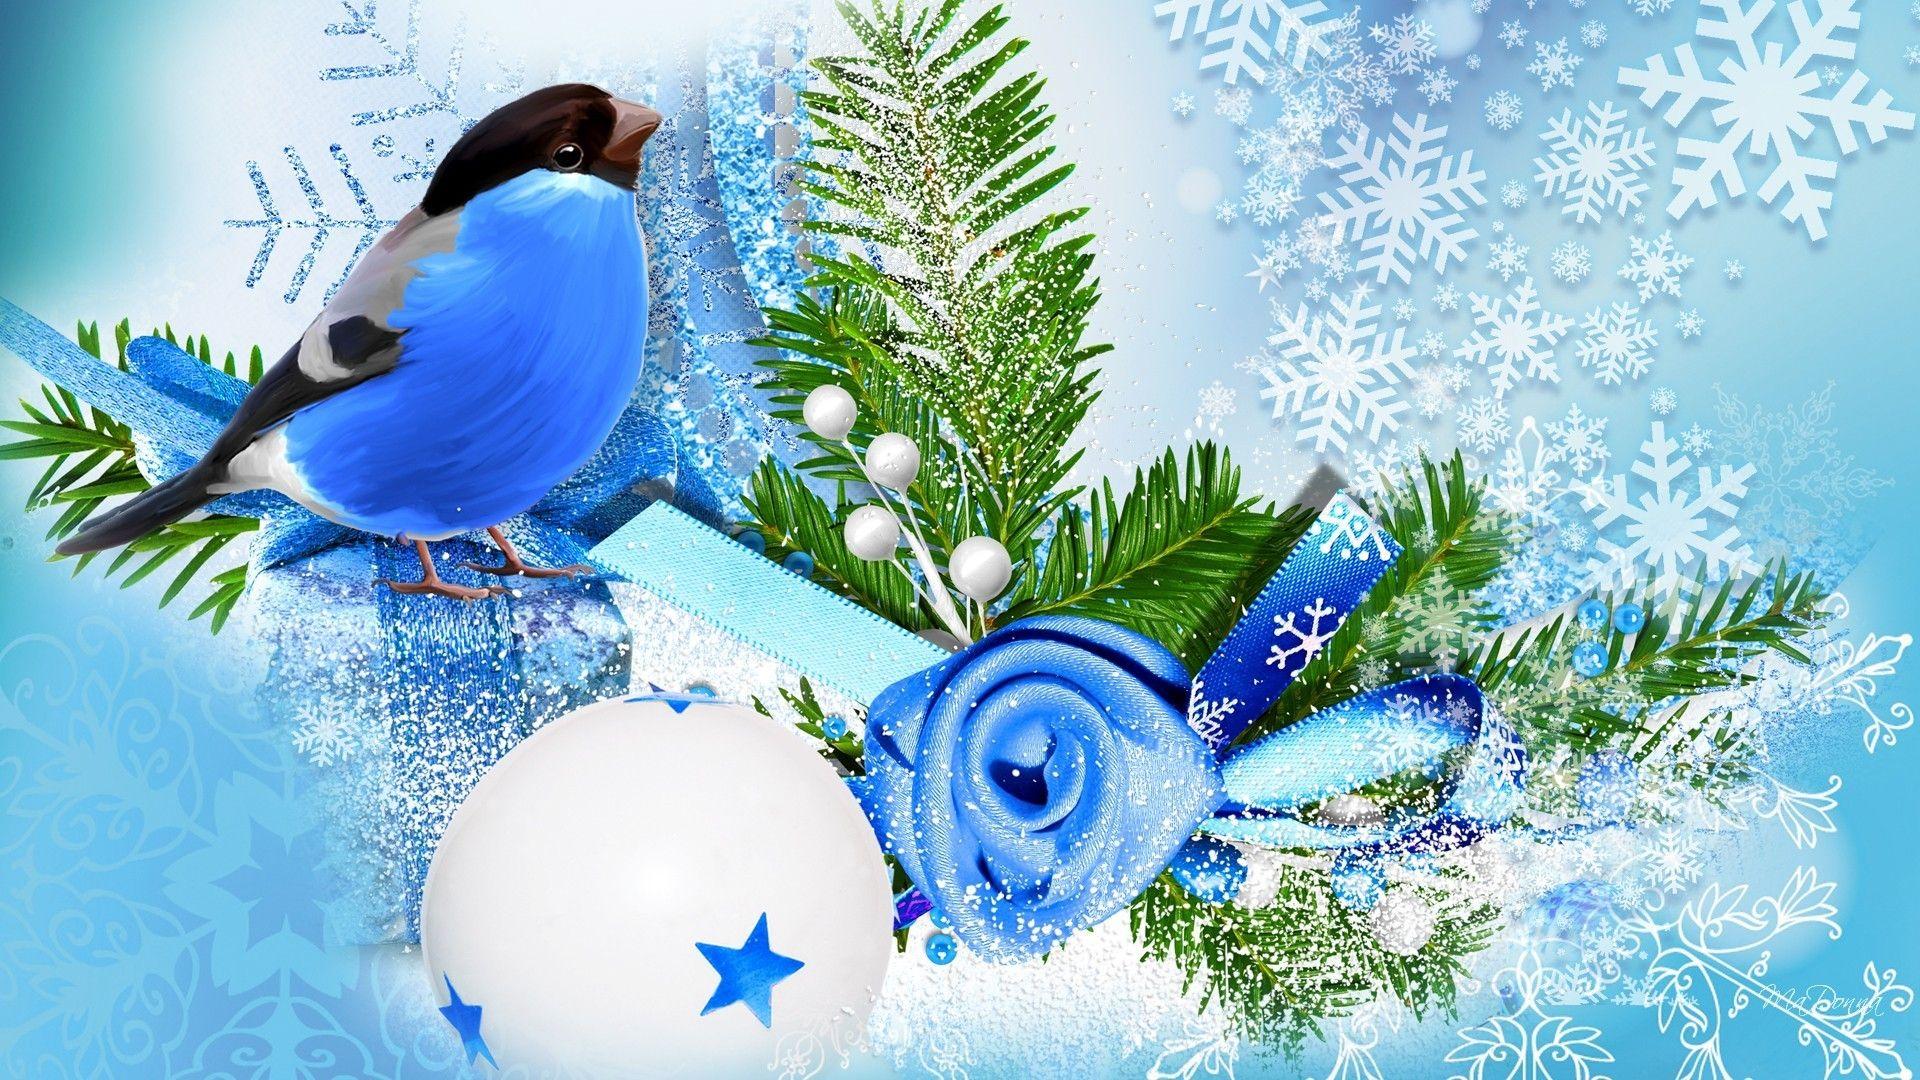 Blue bird winter season wallpaper. PC